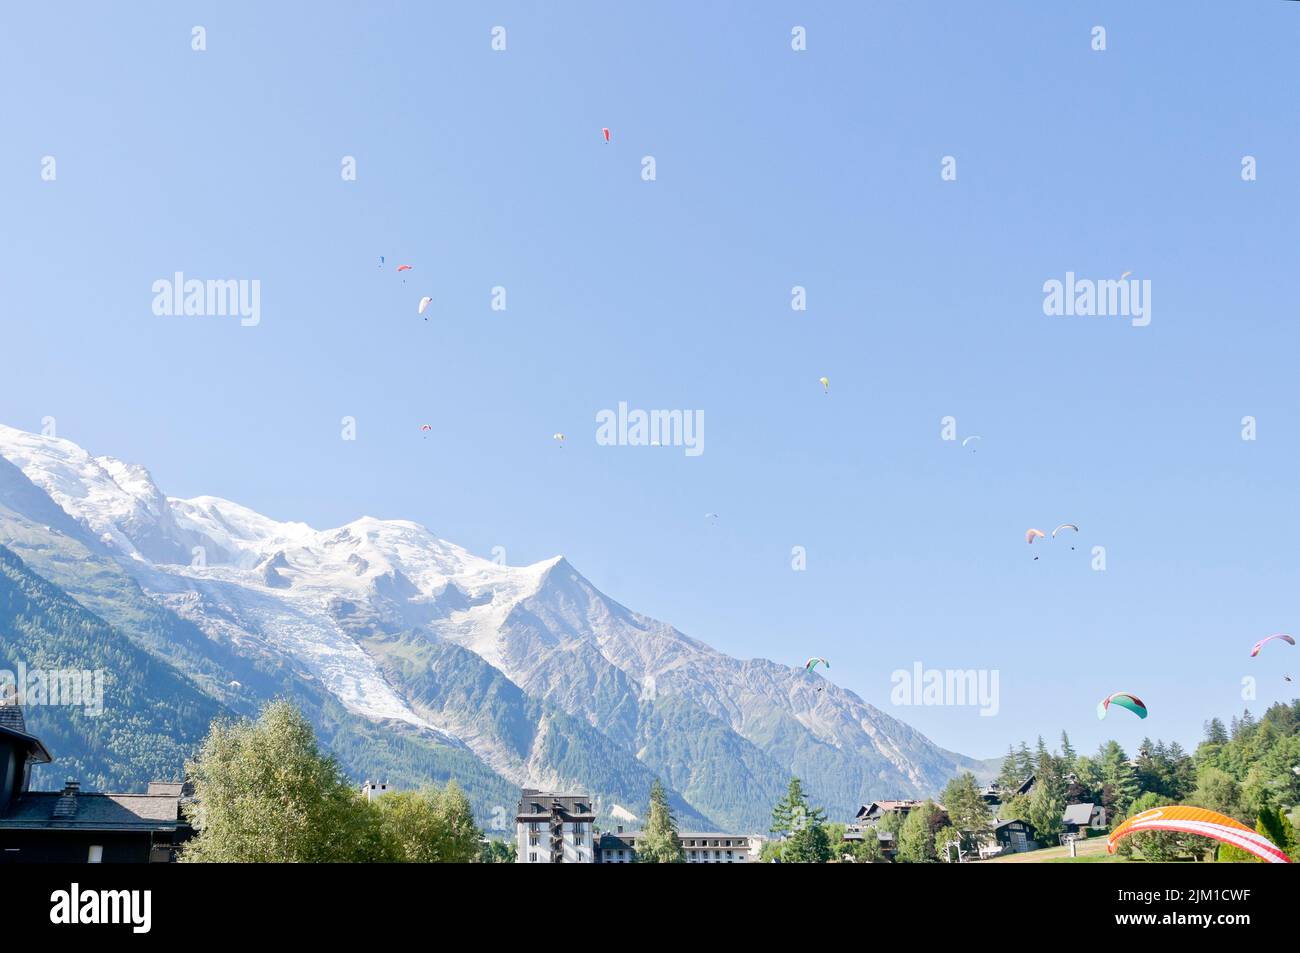 Paragliders above the Chamonix Valley, Chamonix Mont-Blanc, France Stock Photo